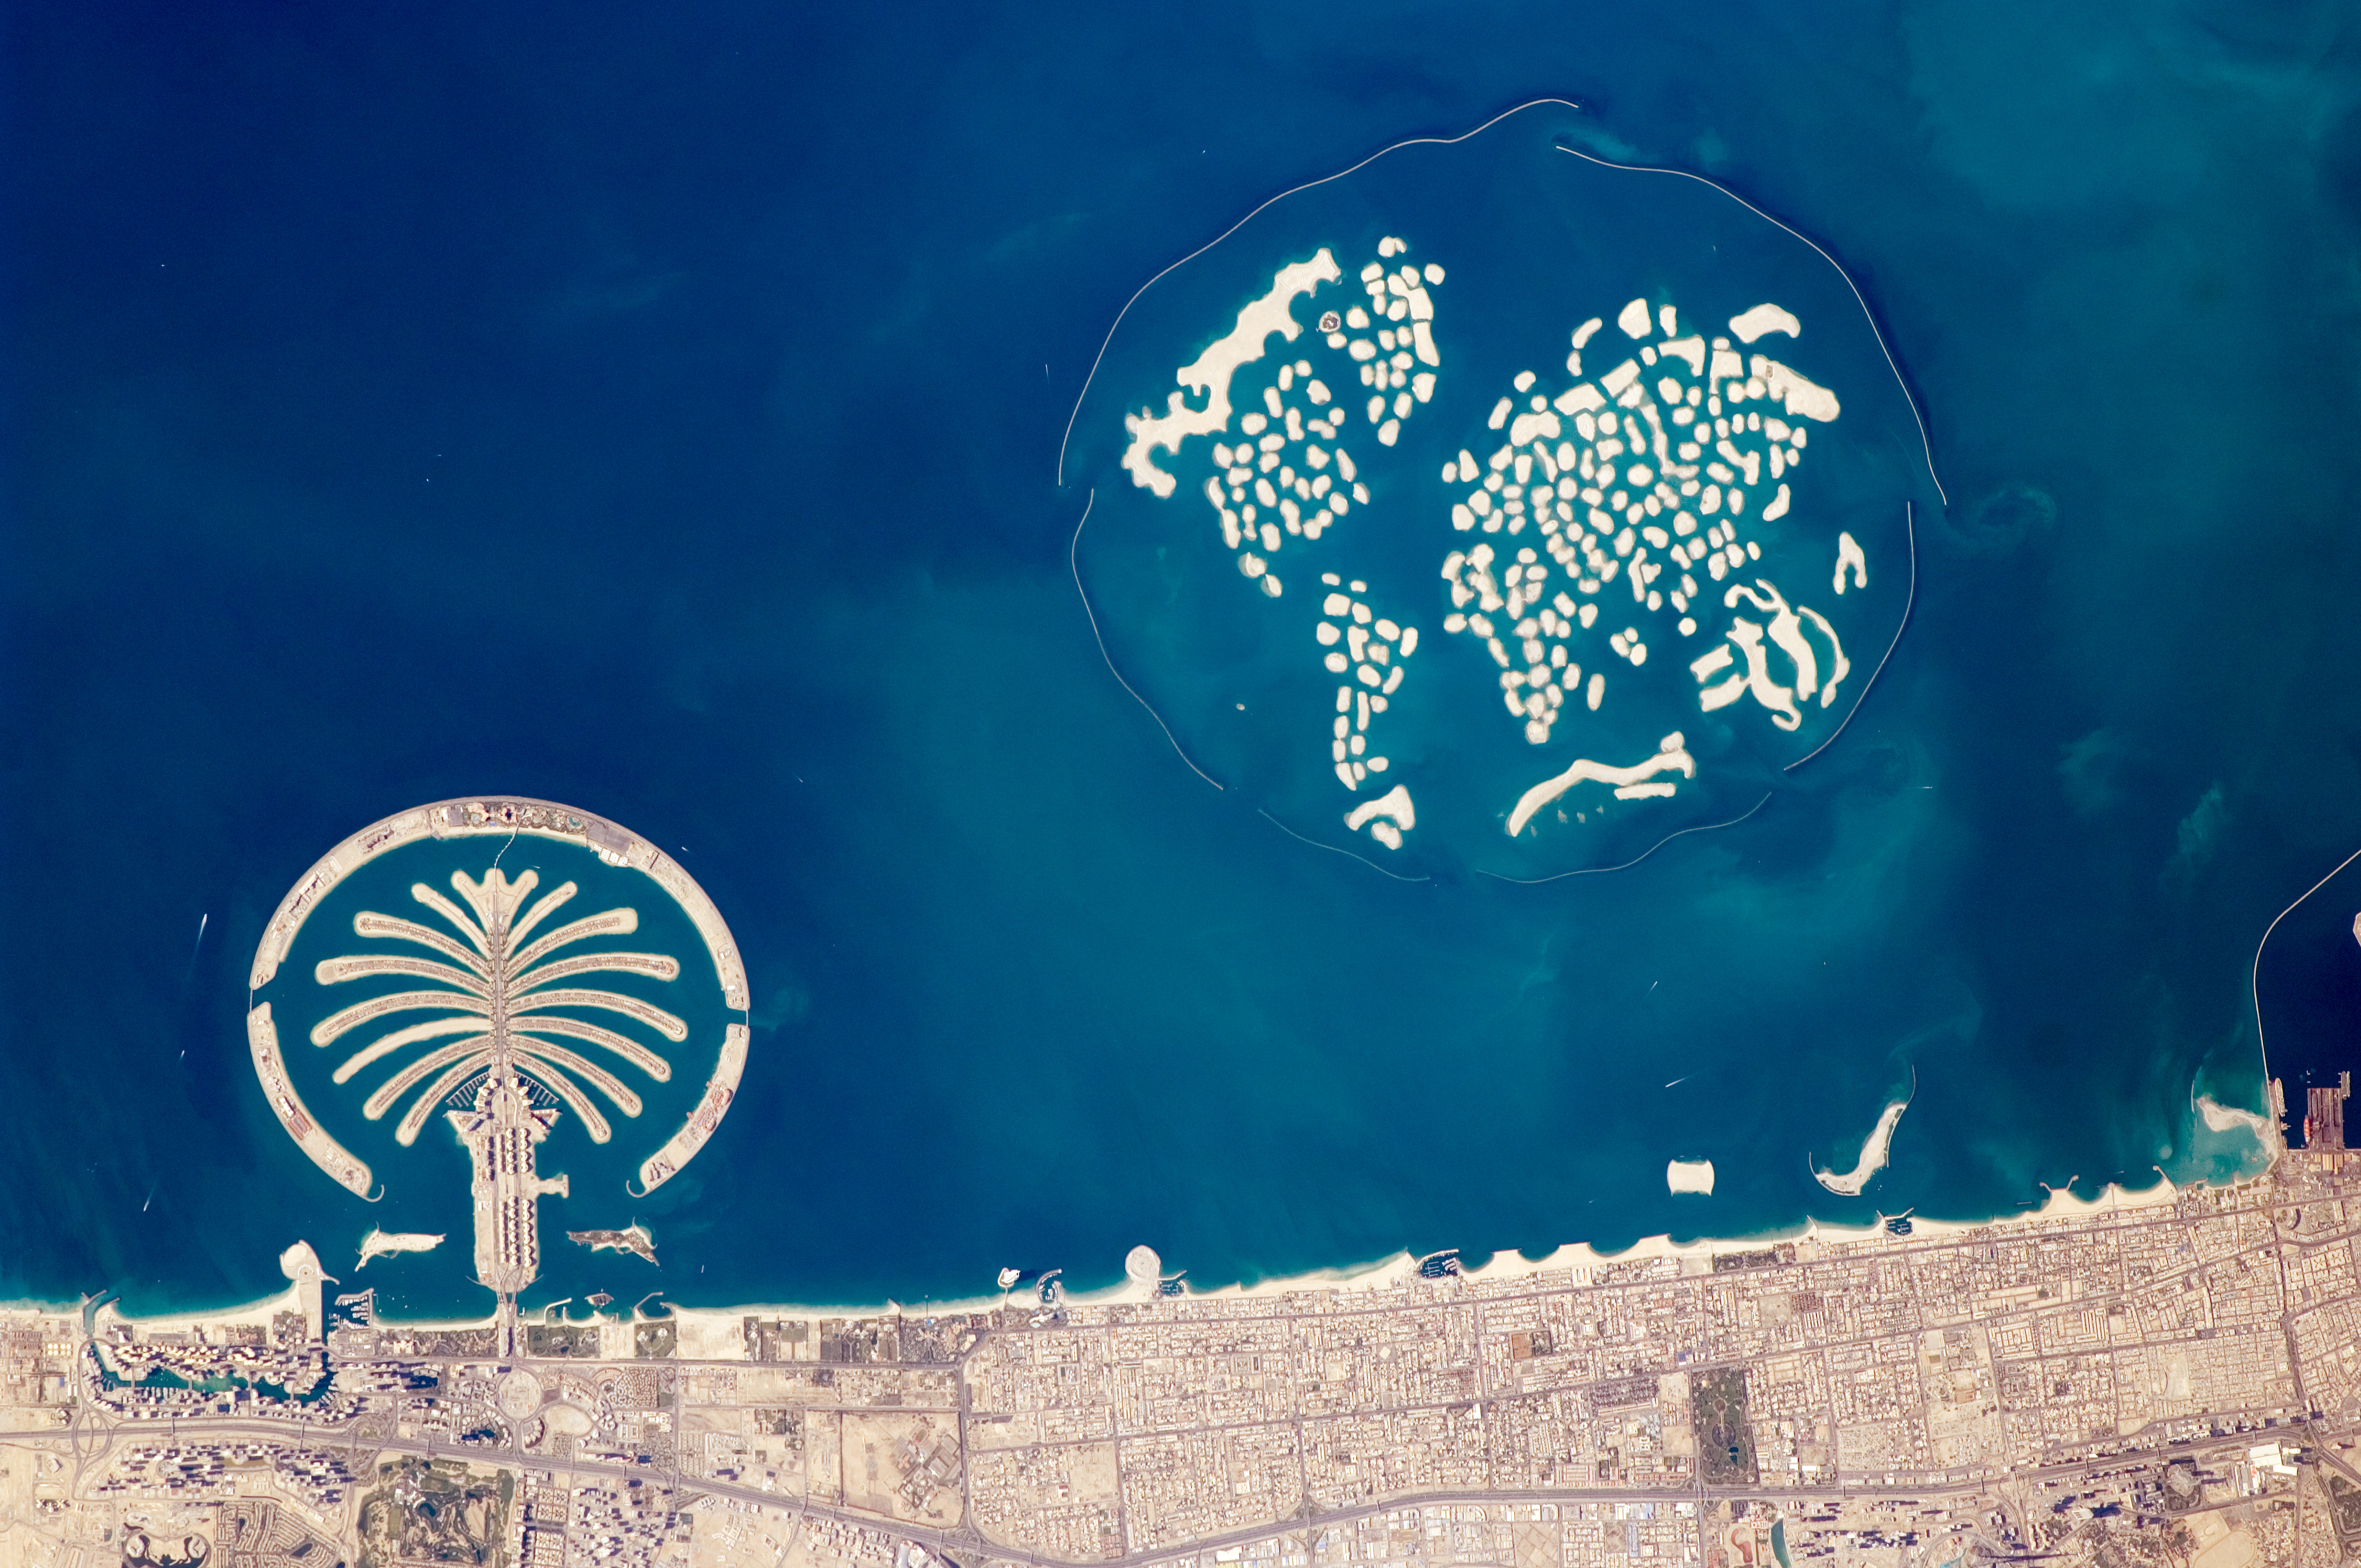 Artificial_Archipelagos,_Dubai,_United_Arab_Emirates_ISS022-E-024940_lrg